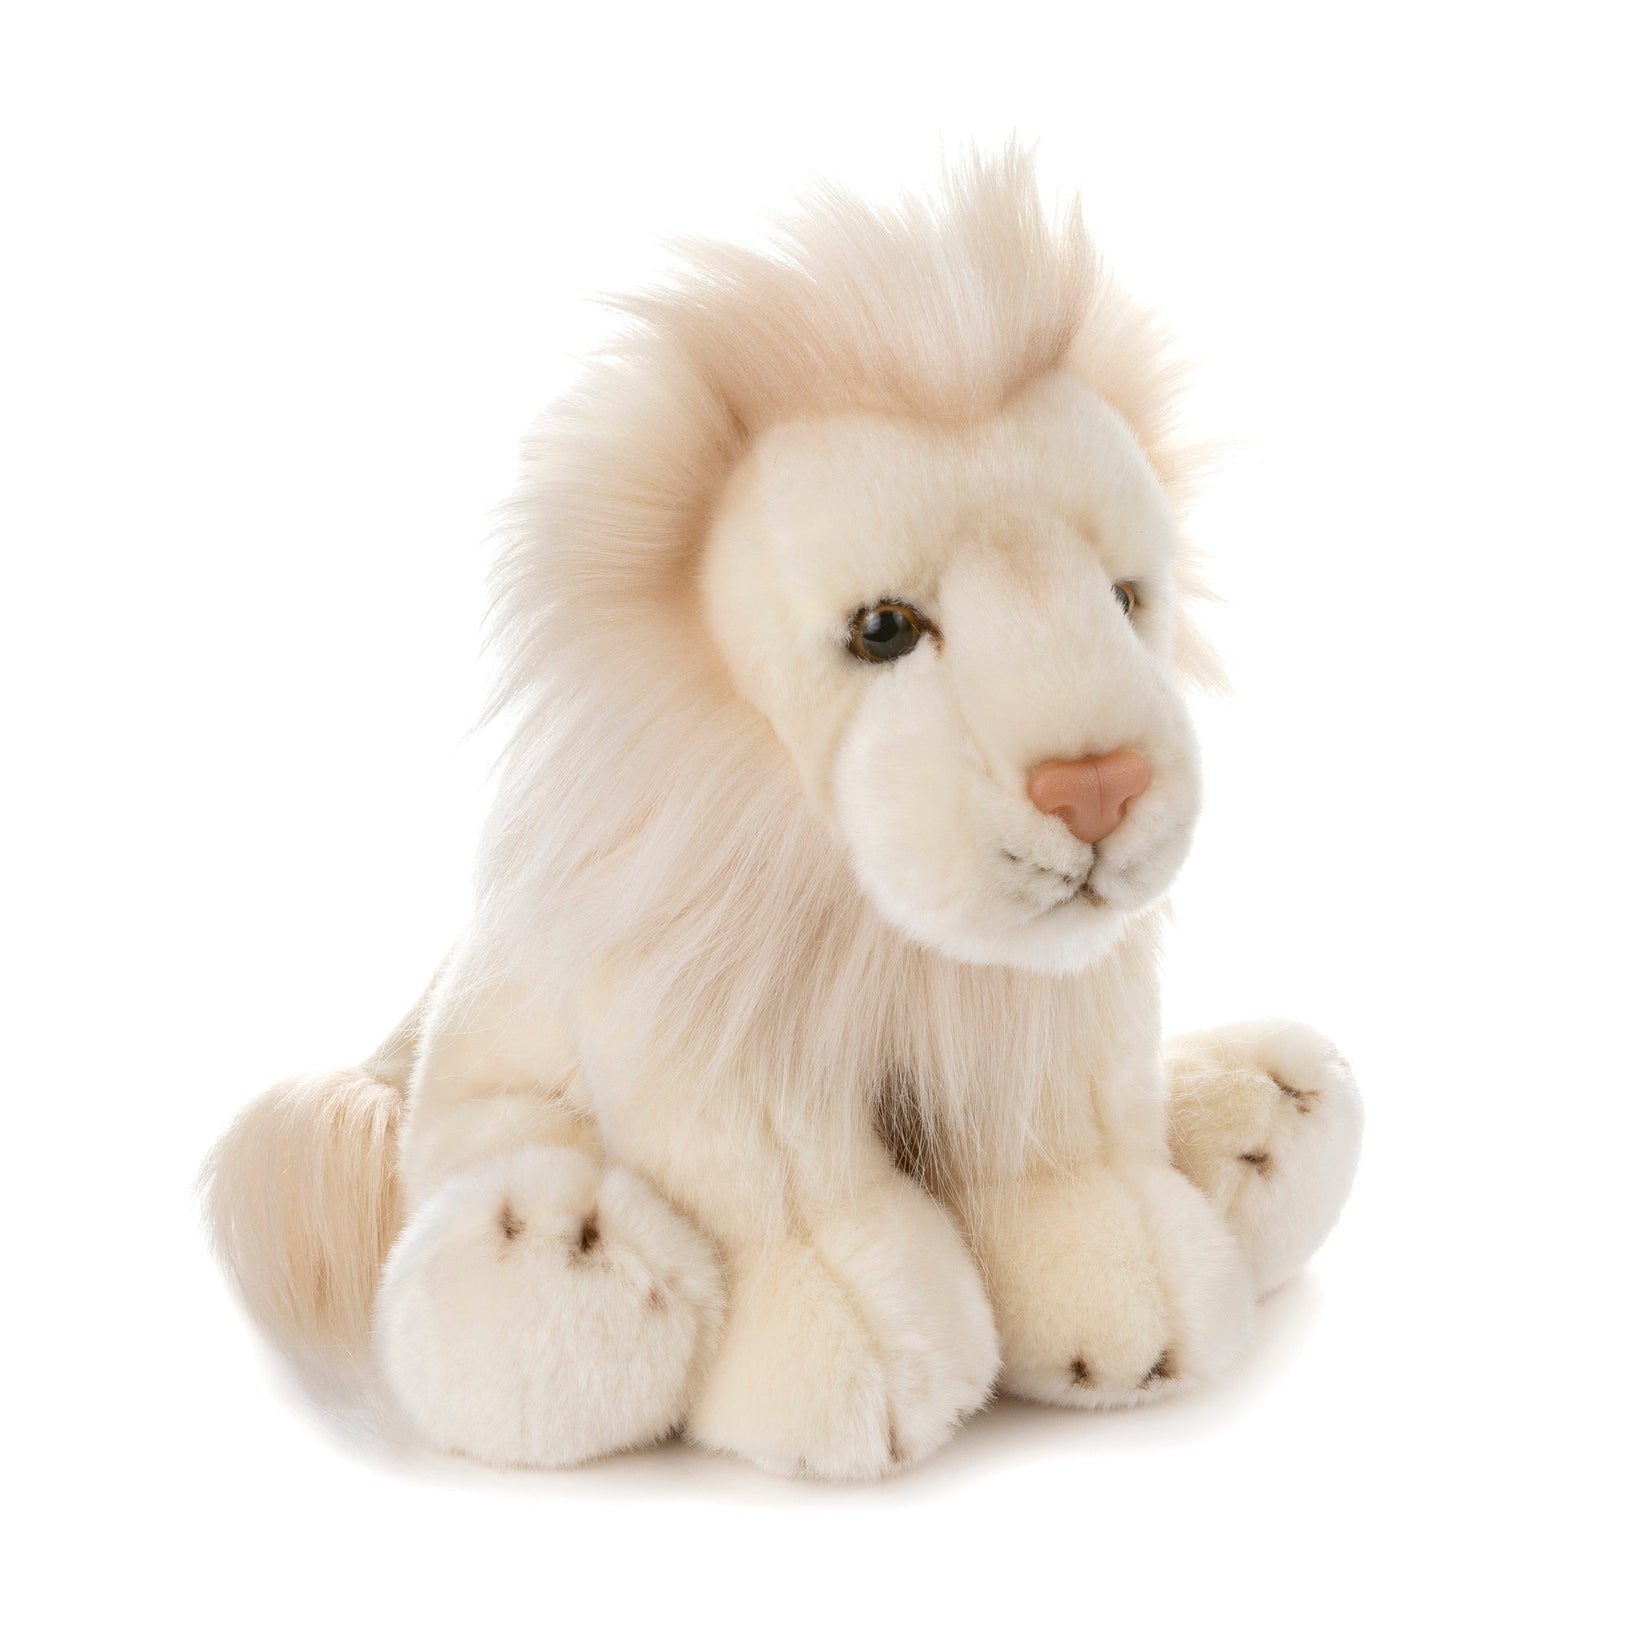 Stuffed Animal - White Lion